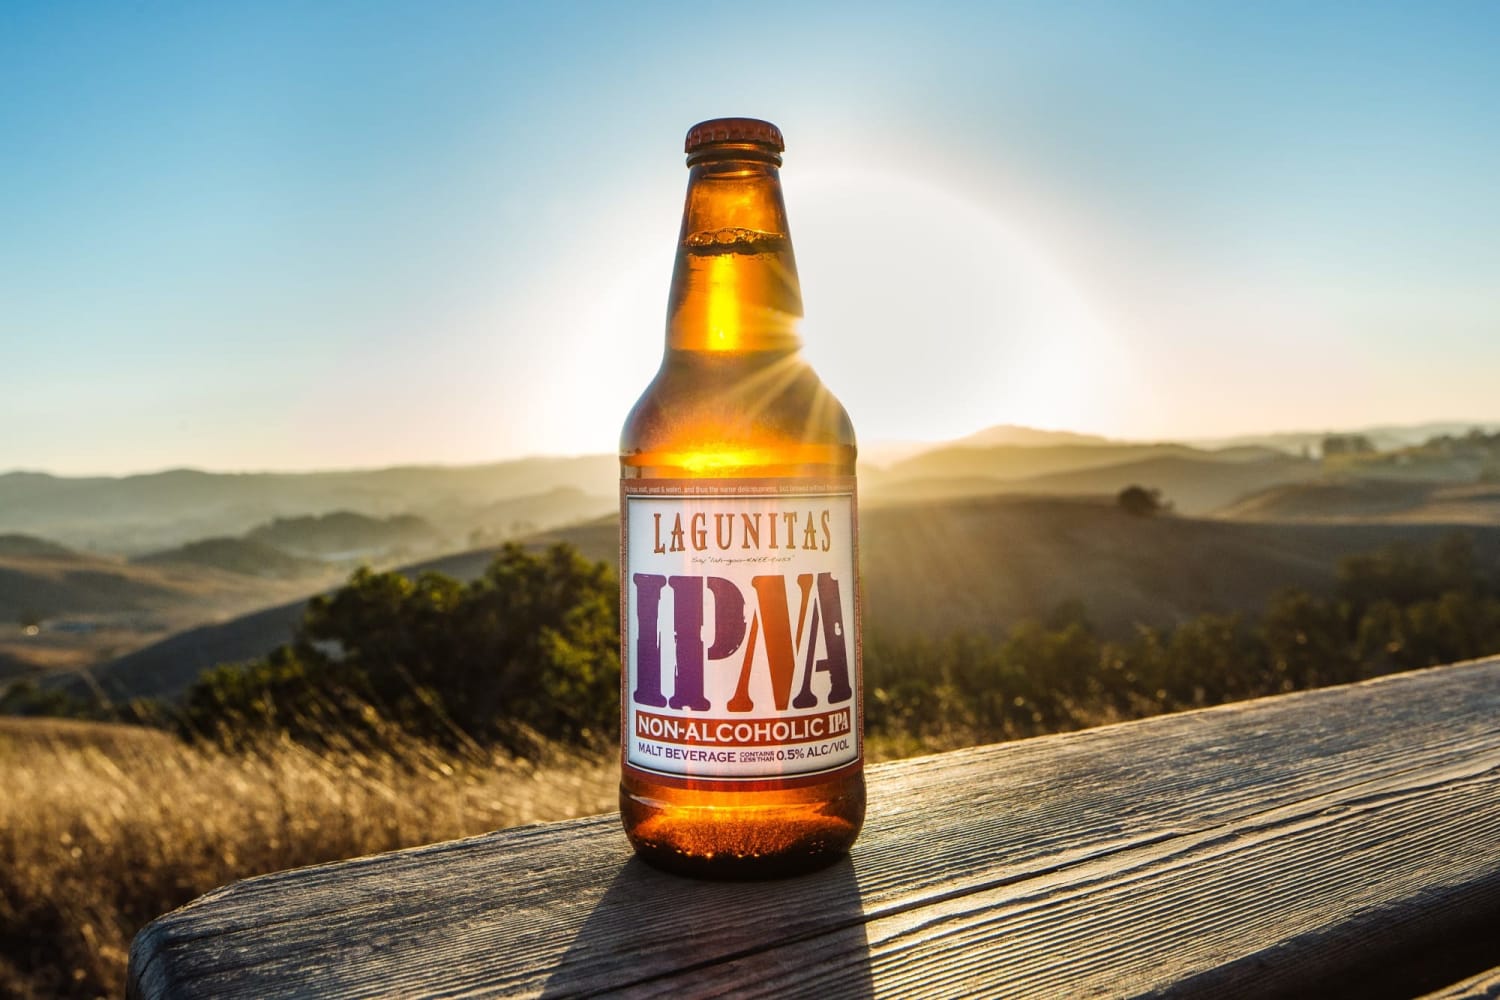 Lagunitas IPNA brings bold, hoppy flavor to the non-alcoholic beer space